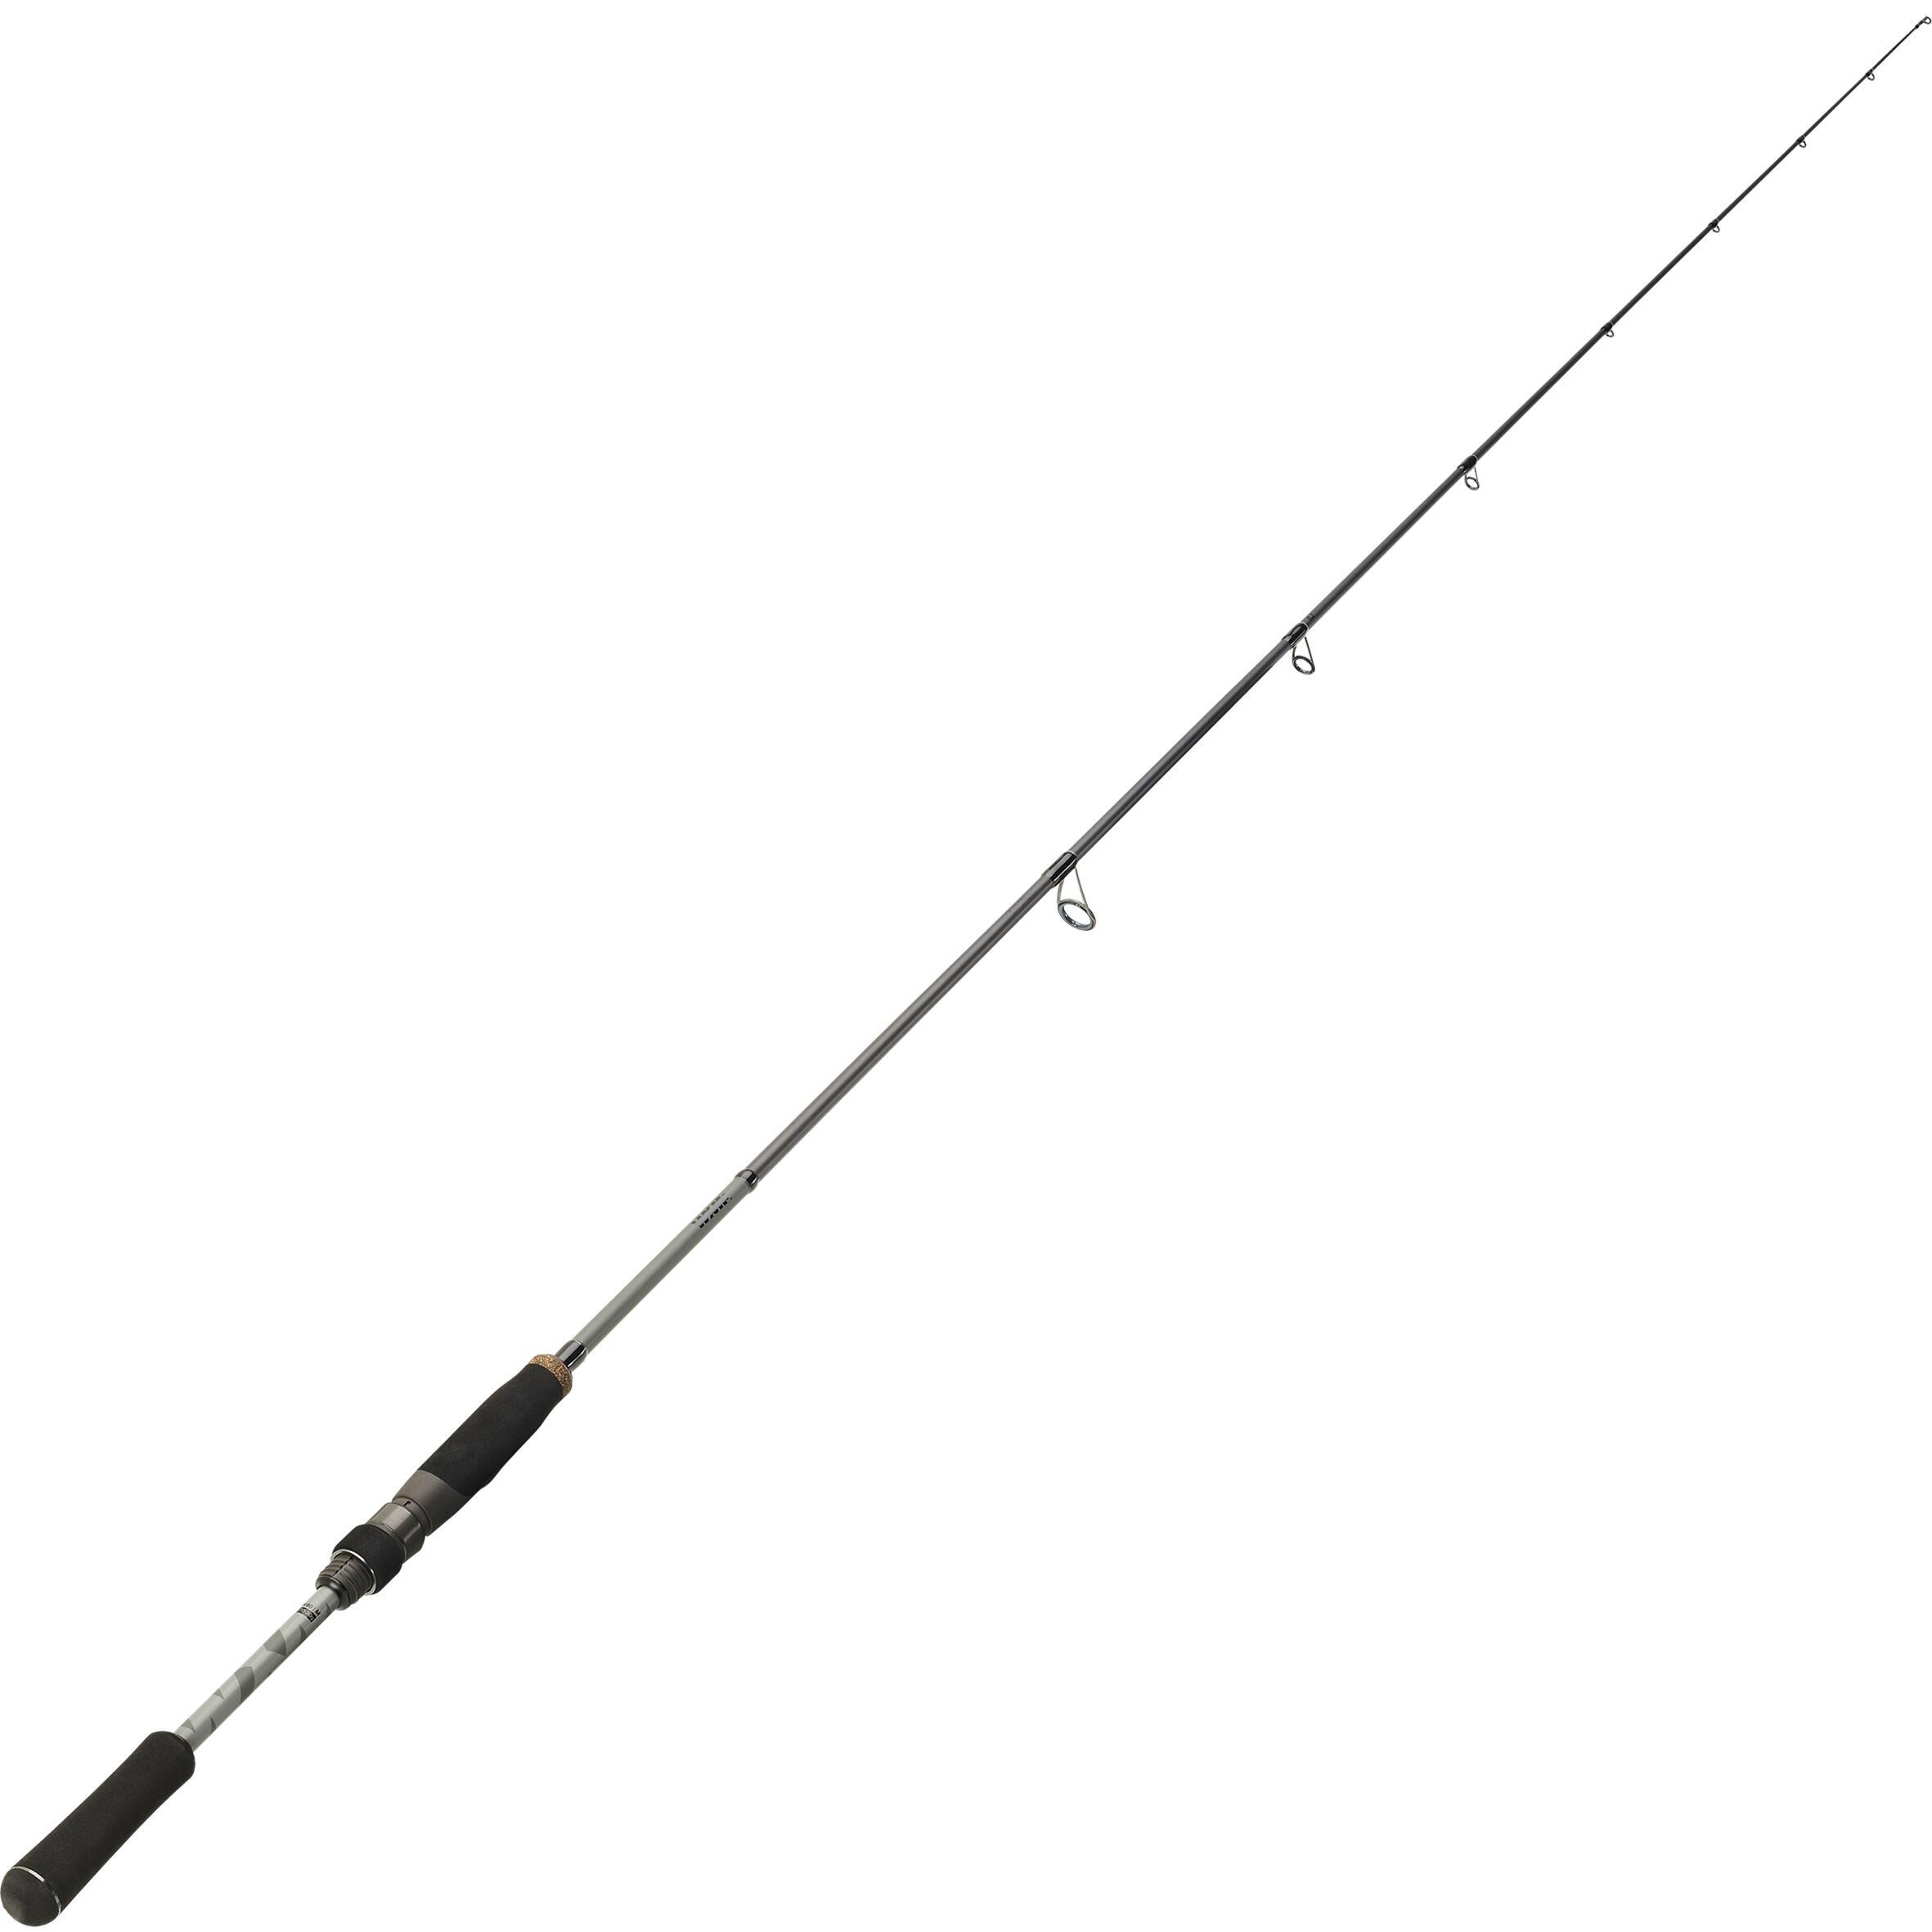 LURE FISHING ROD WXM-5 190 M 1/10